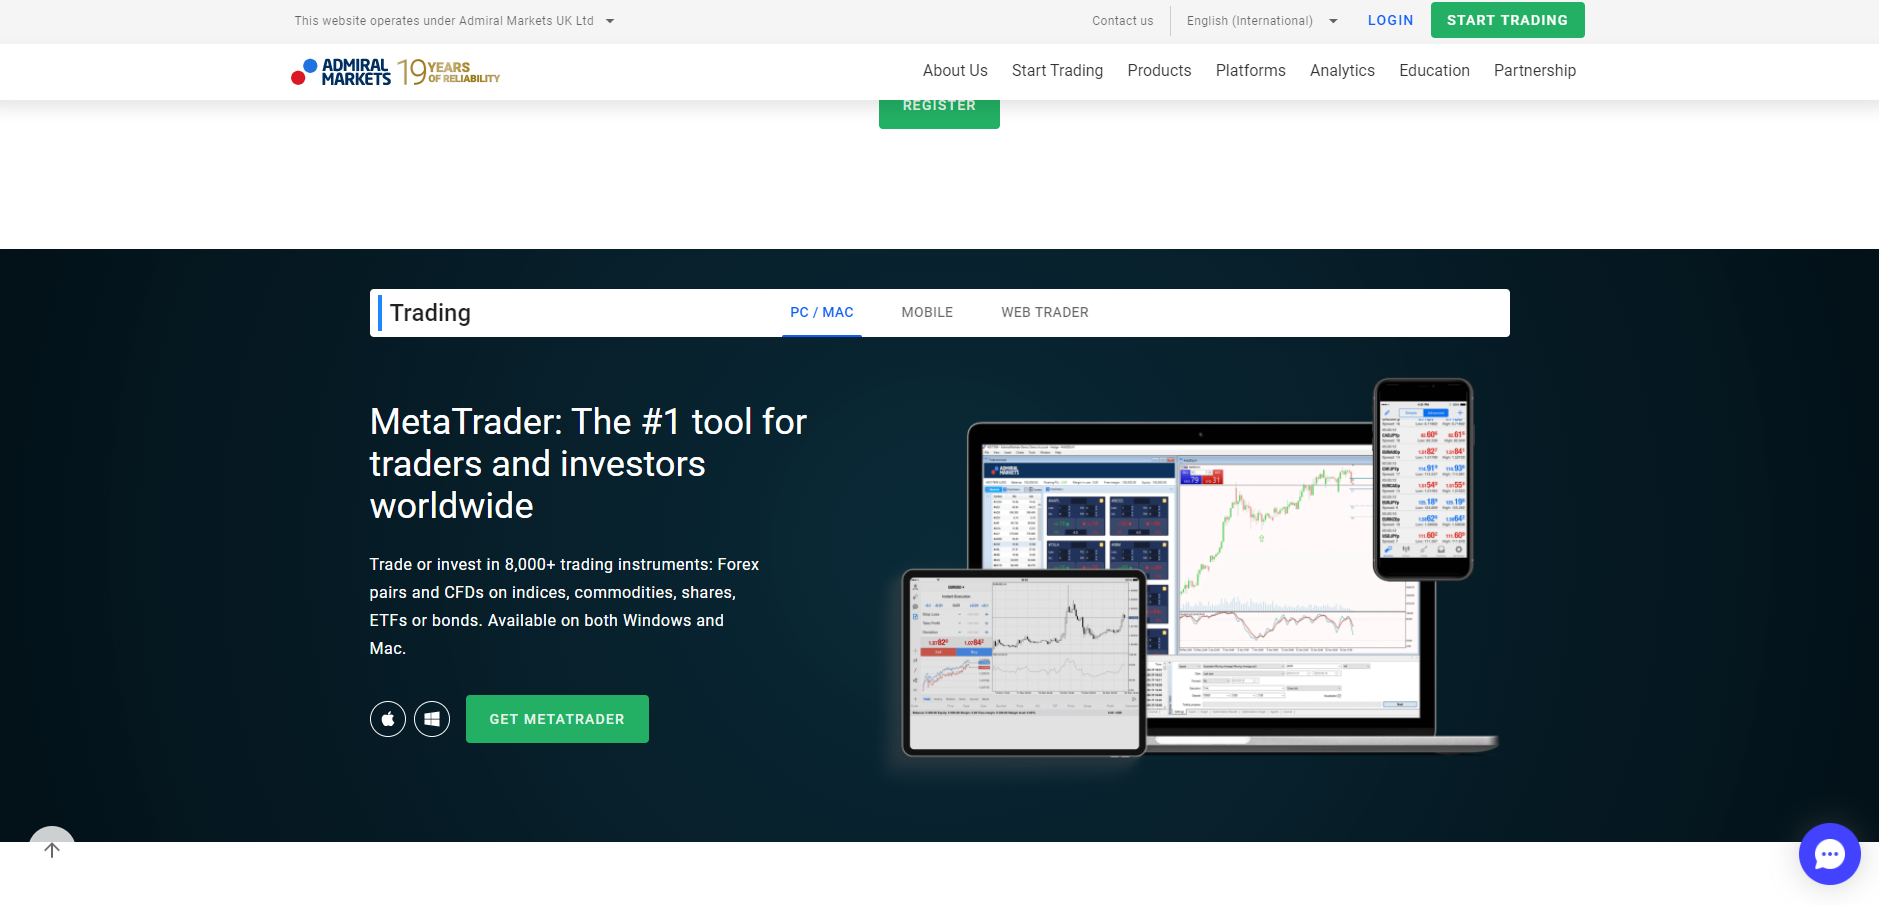 Official website of the forex platform Admiral Markets